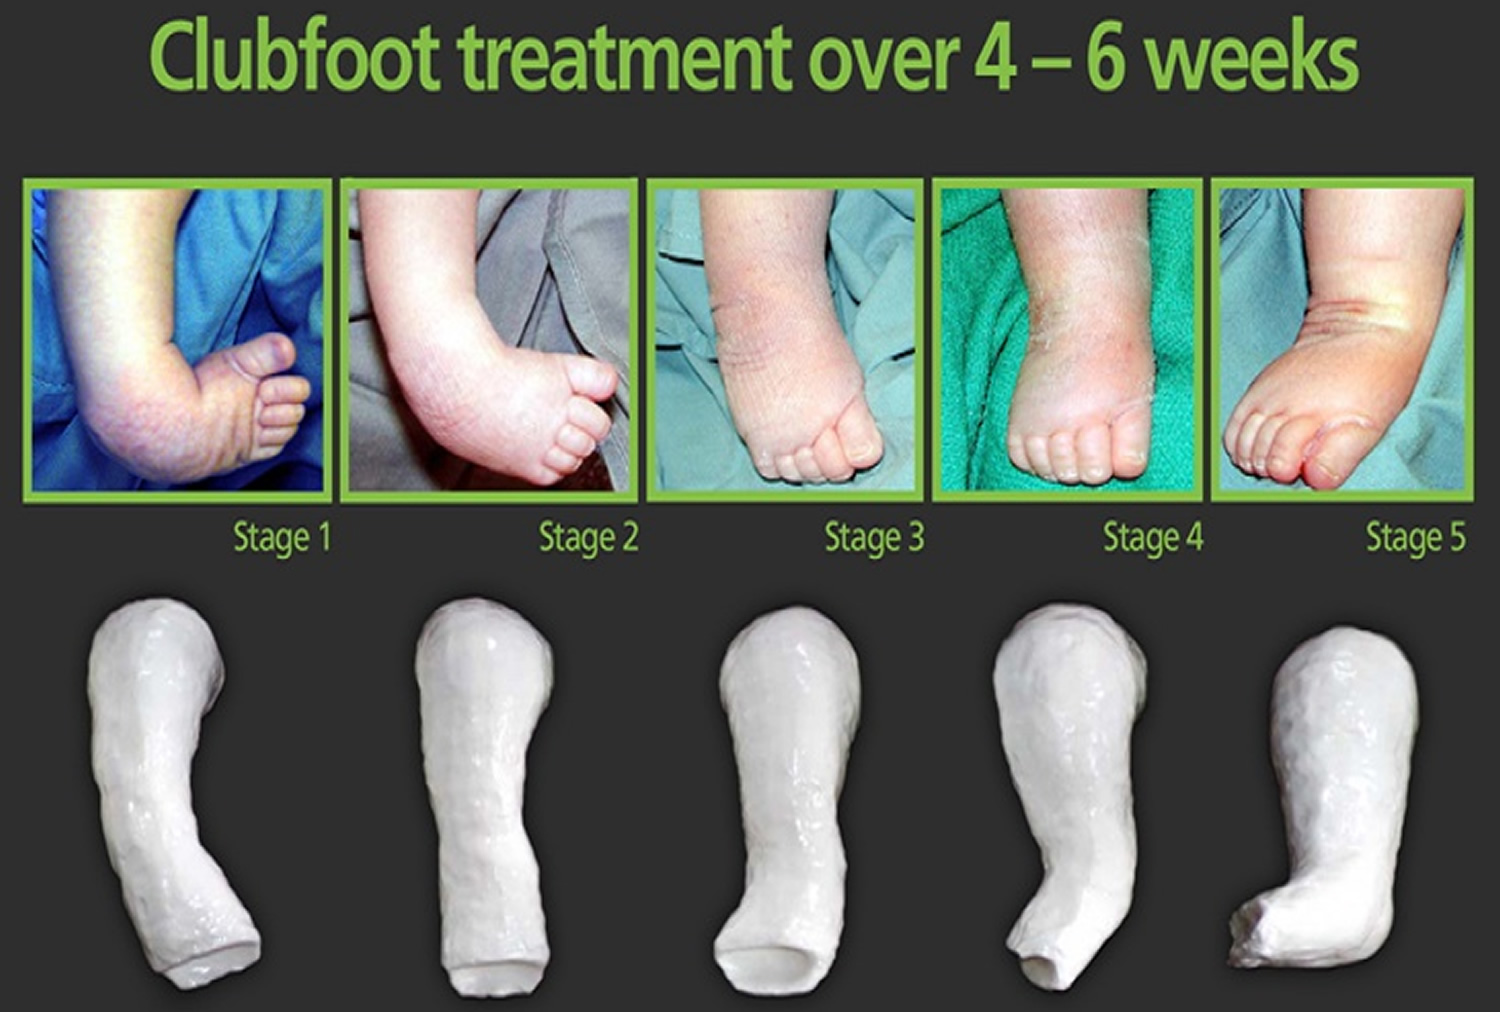 Ponseti method for clubfoot treatment